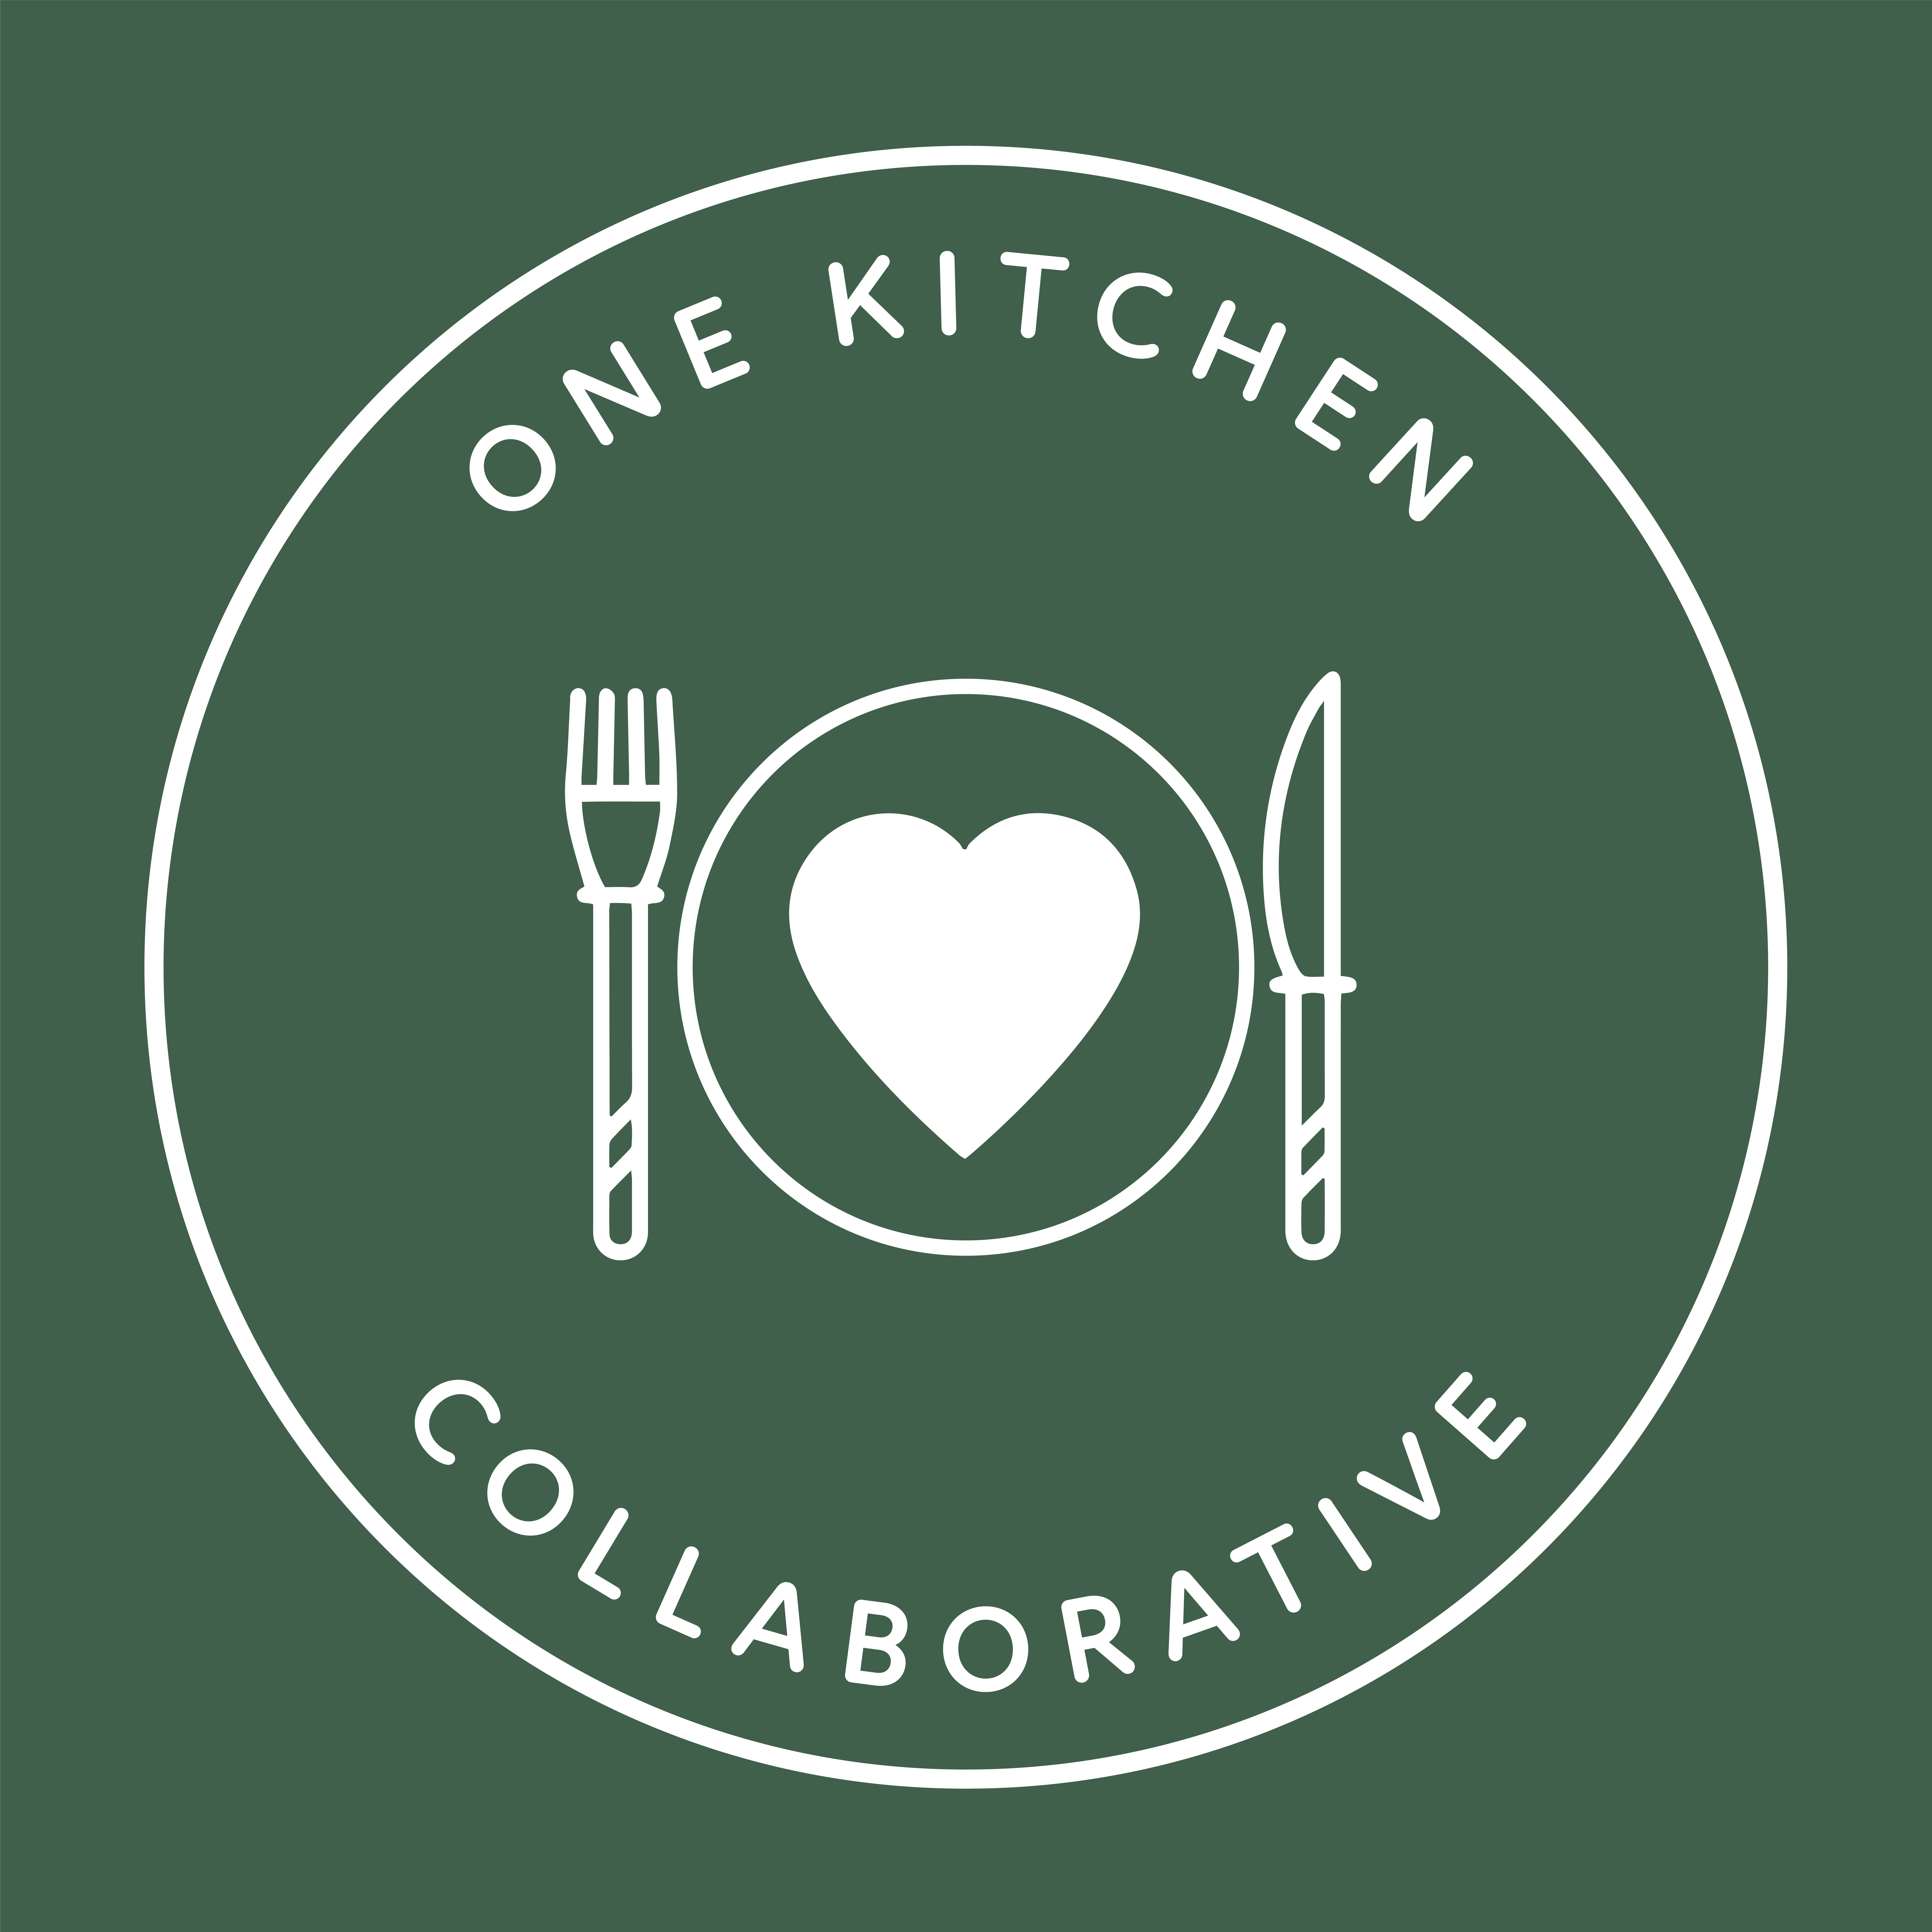 One Kitchen Collaborative